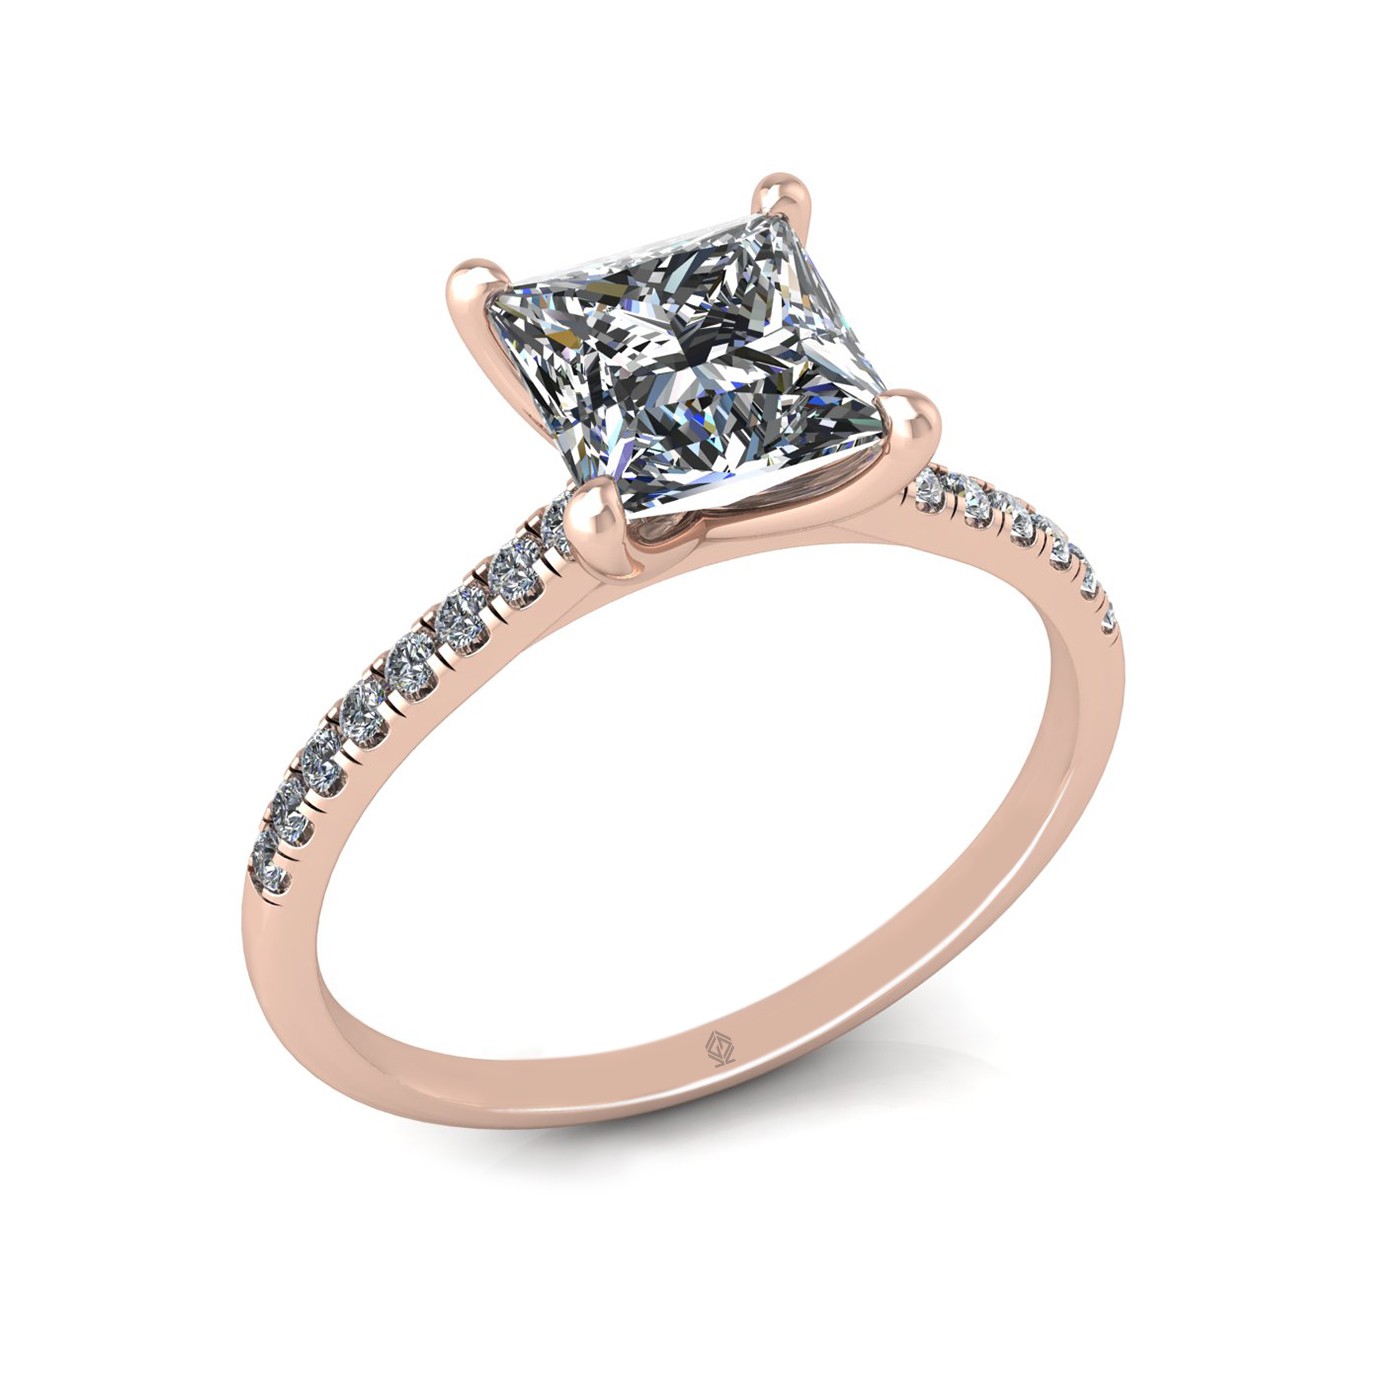 18k rose gold 1,50 ct 4 prongs princess cut diamond engagement ring with whisper thin pavÉ set band